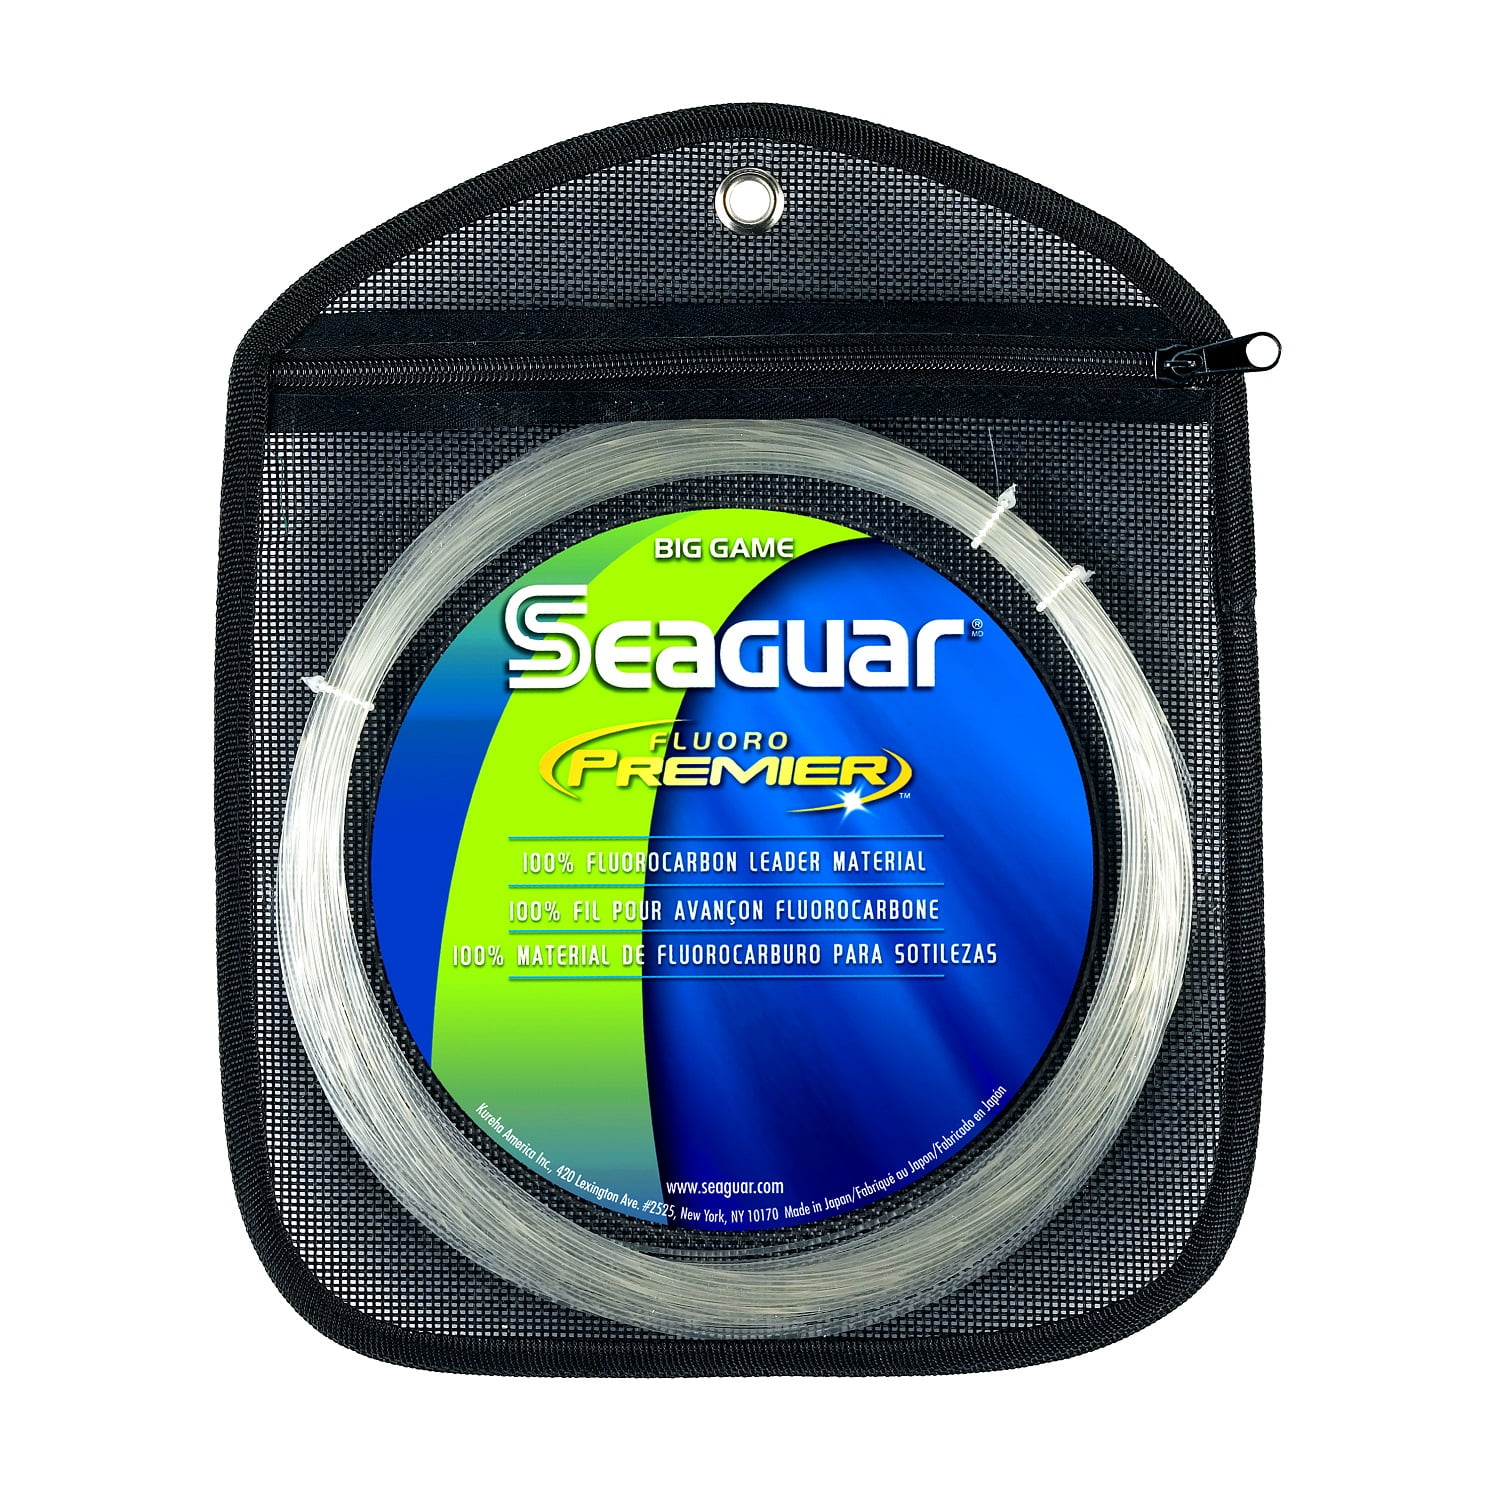 Seaguar Fluoro Premier Fluorocarbon Leader Clear Fishing Line 25 Yards 